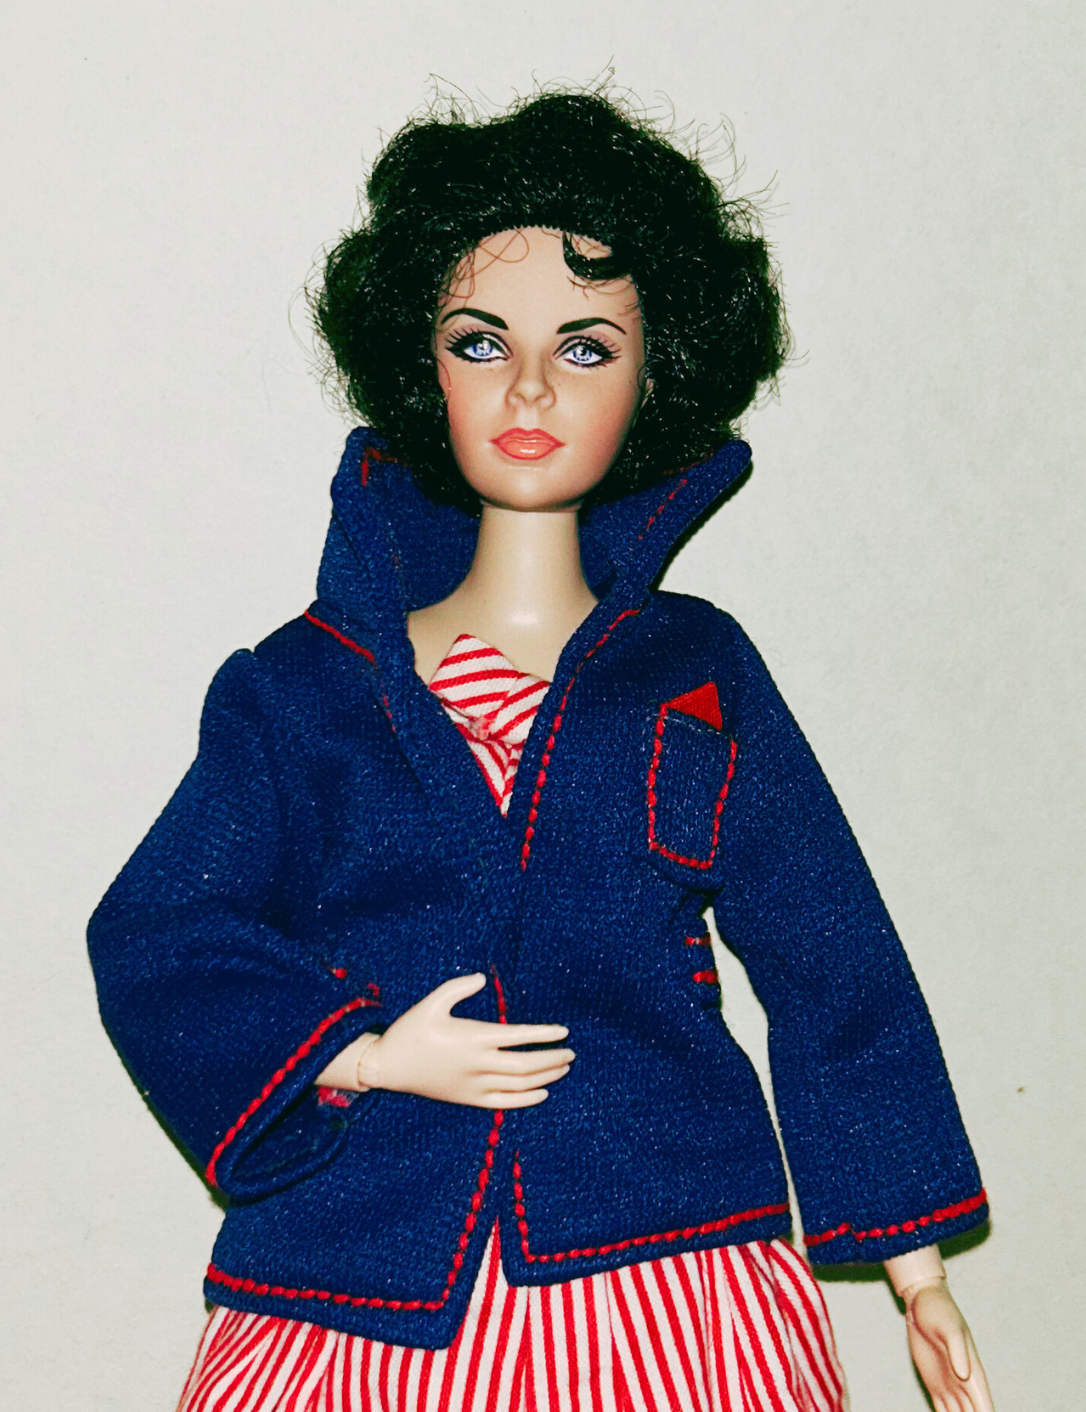 1978 Pedigree Sindy Fashion Doll Jet Setter Jacket on Barbie Curve Doll